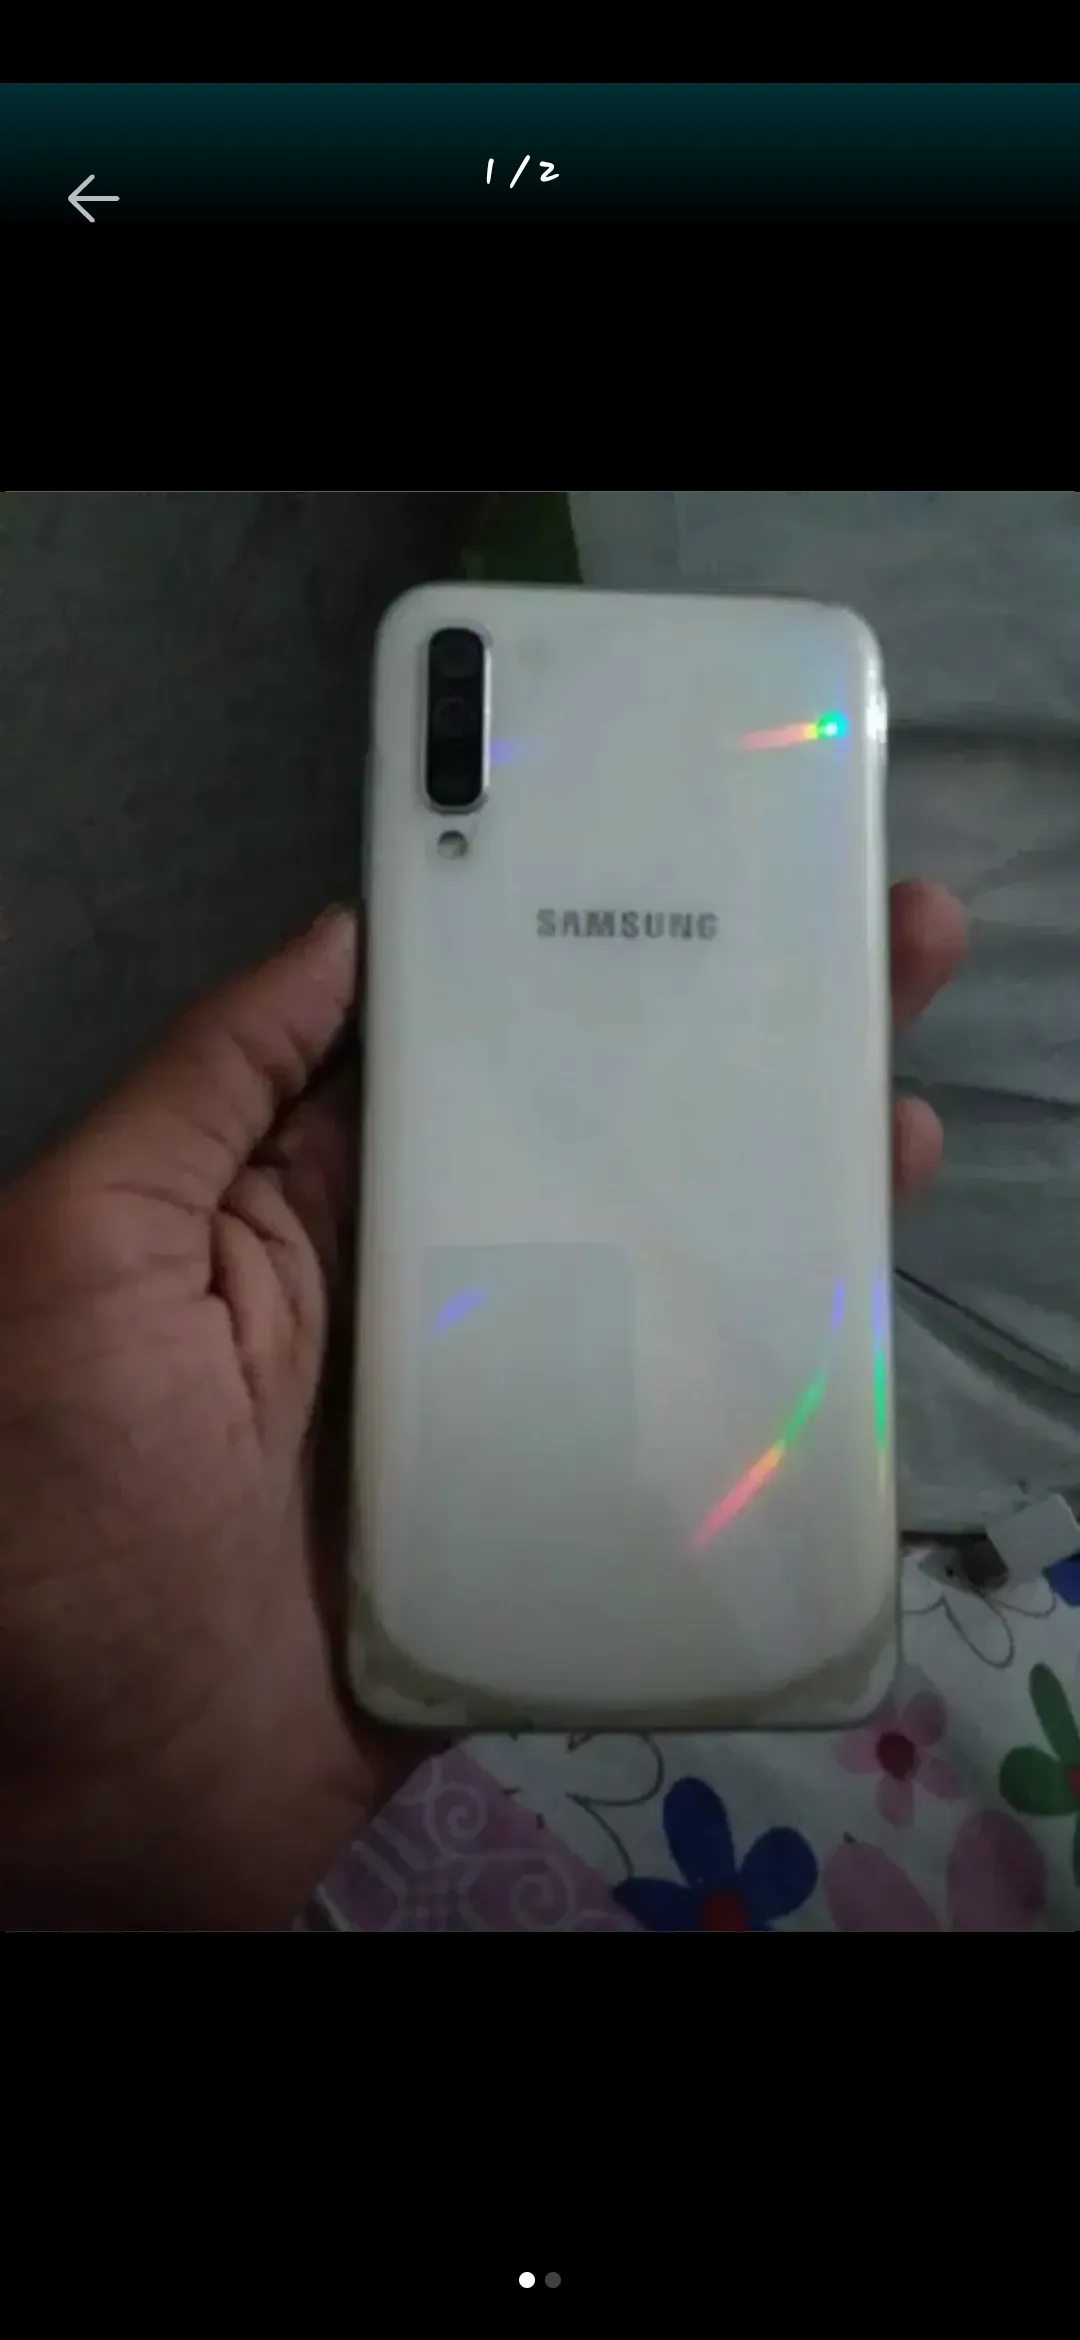 Samsung Galaxy A50 - photo 1